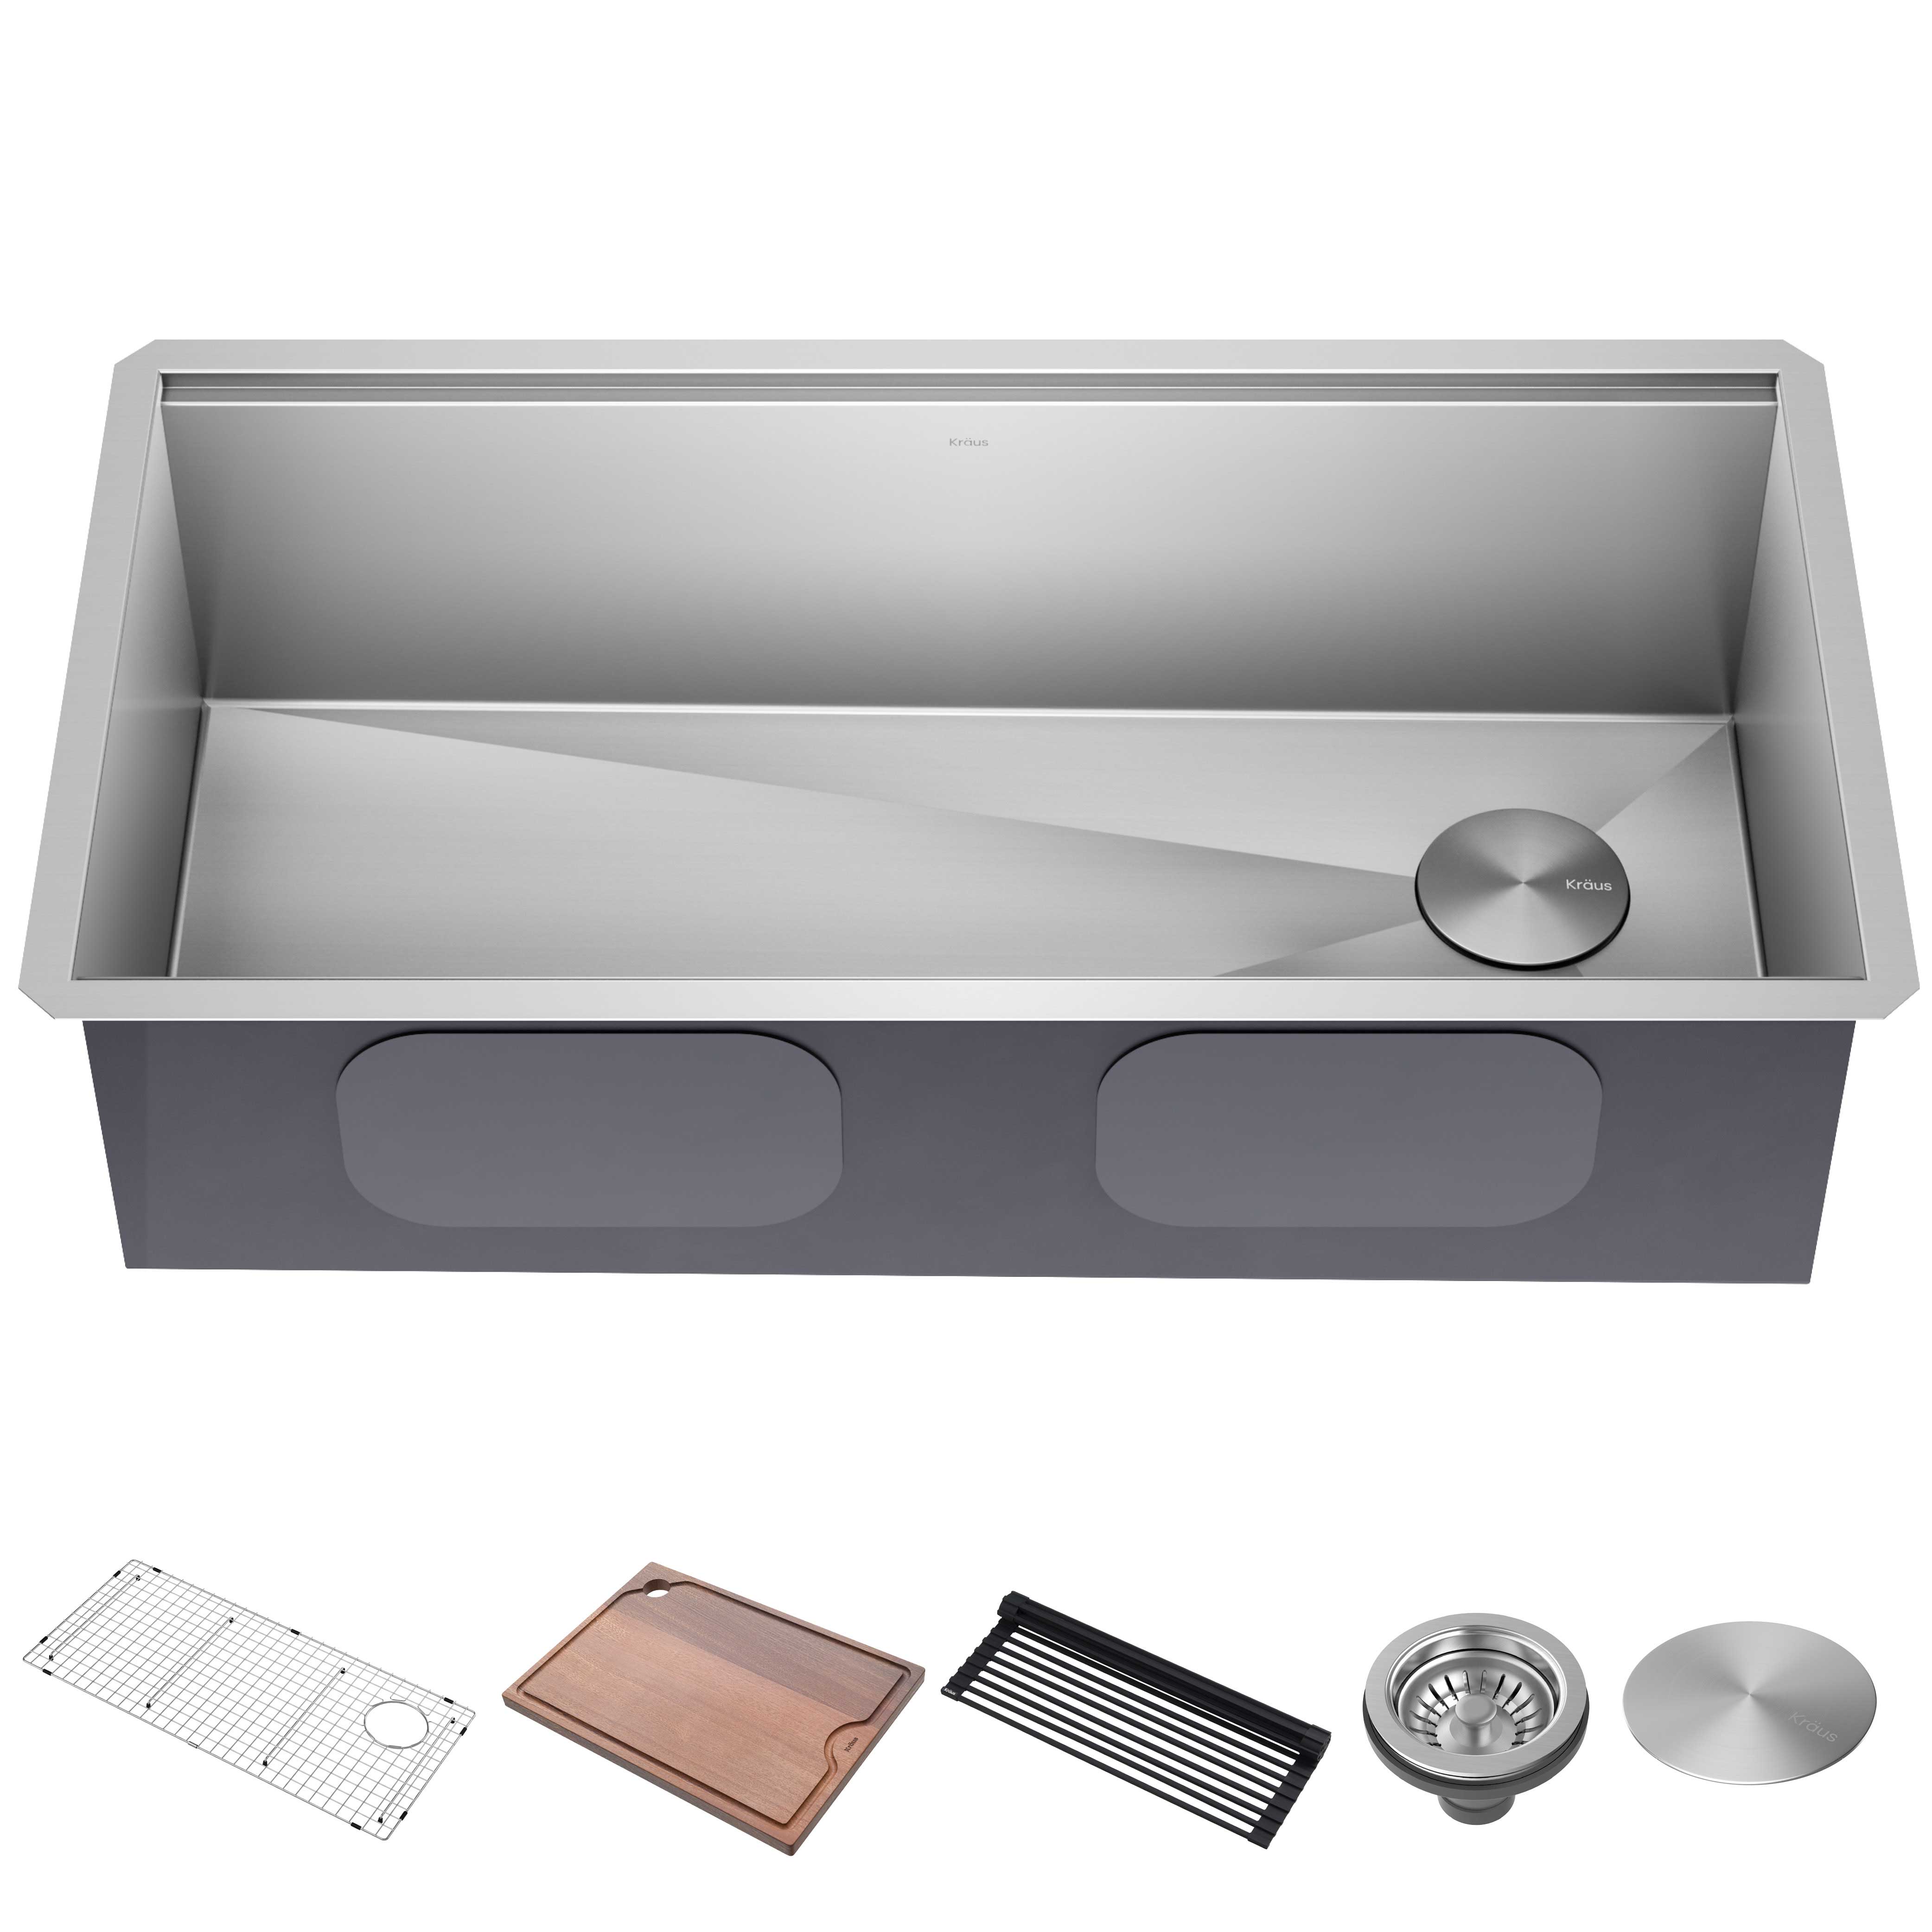 Kraus Kore36Undermount Workstation 16 Gauge Stainless Steel Single Bowl Kitchen Sink with Accessories - image 1 of 15